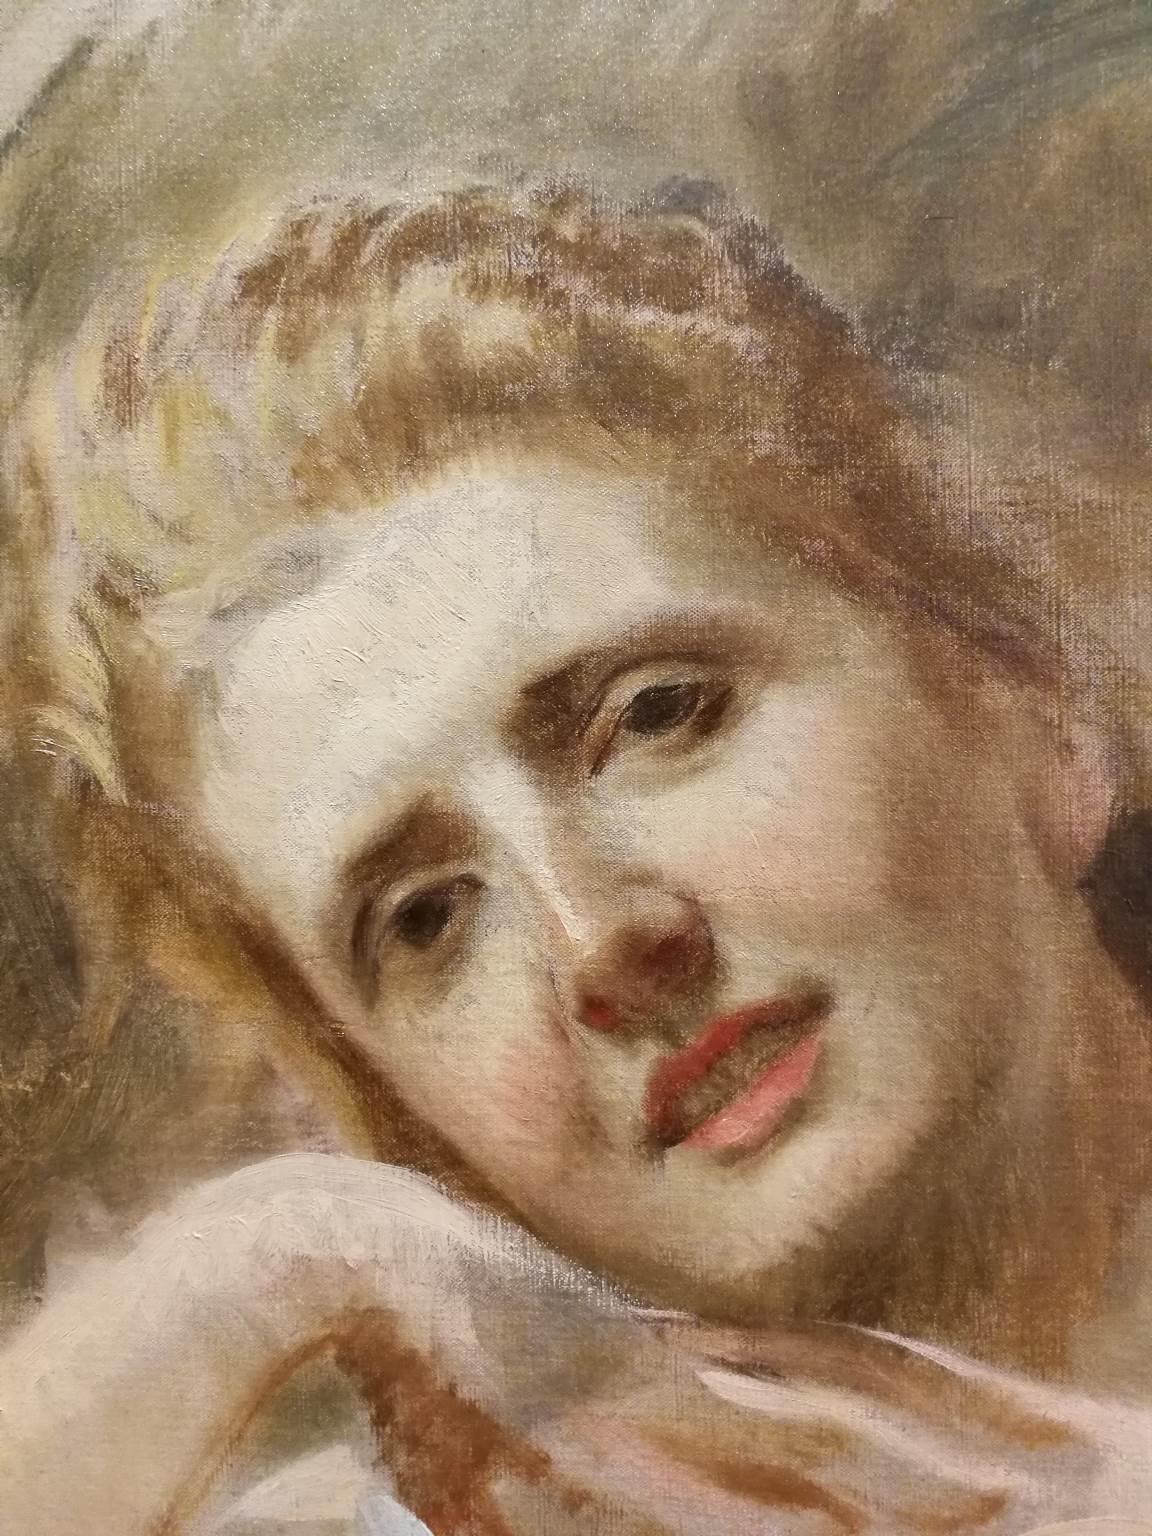 Peinture à l'huile toile figurative florentine toscanne signée Gordigiani 19ème siècle - Painting de Michele Gordigiani